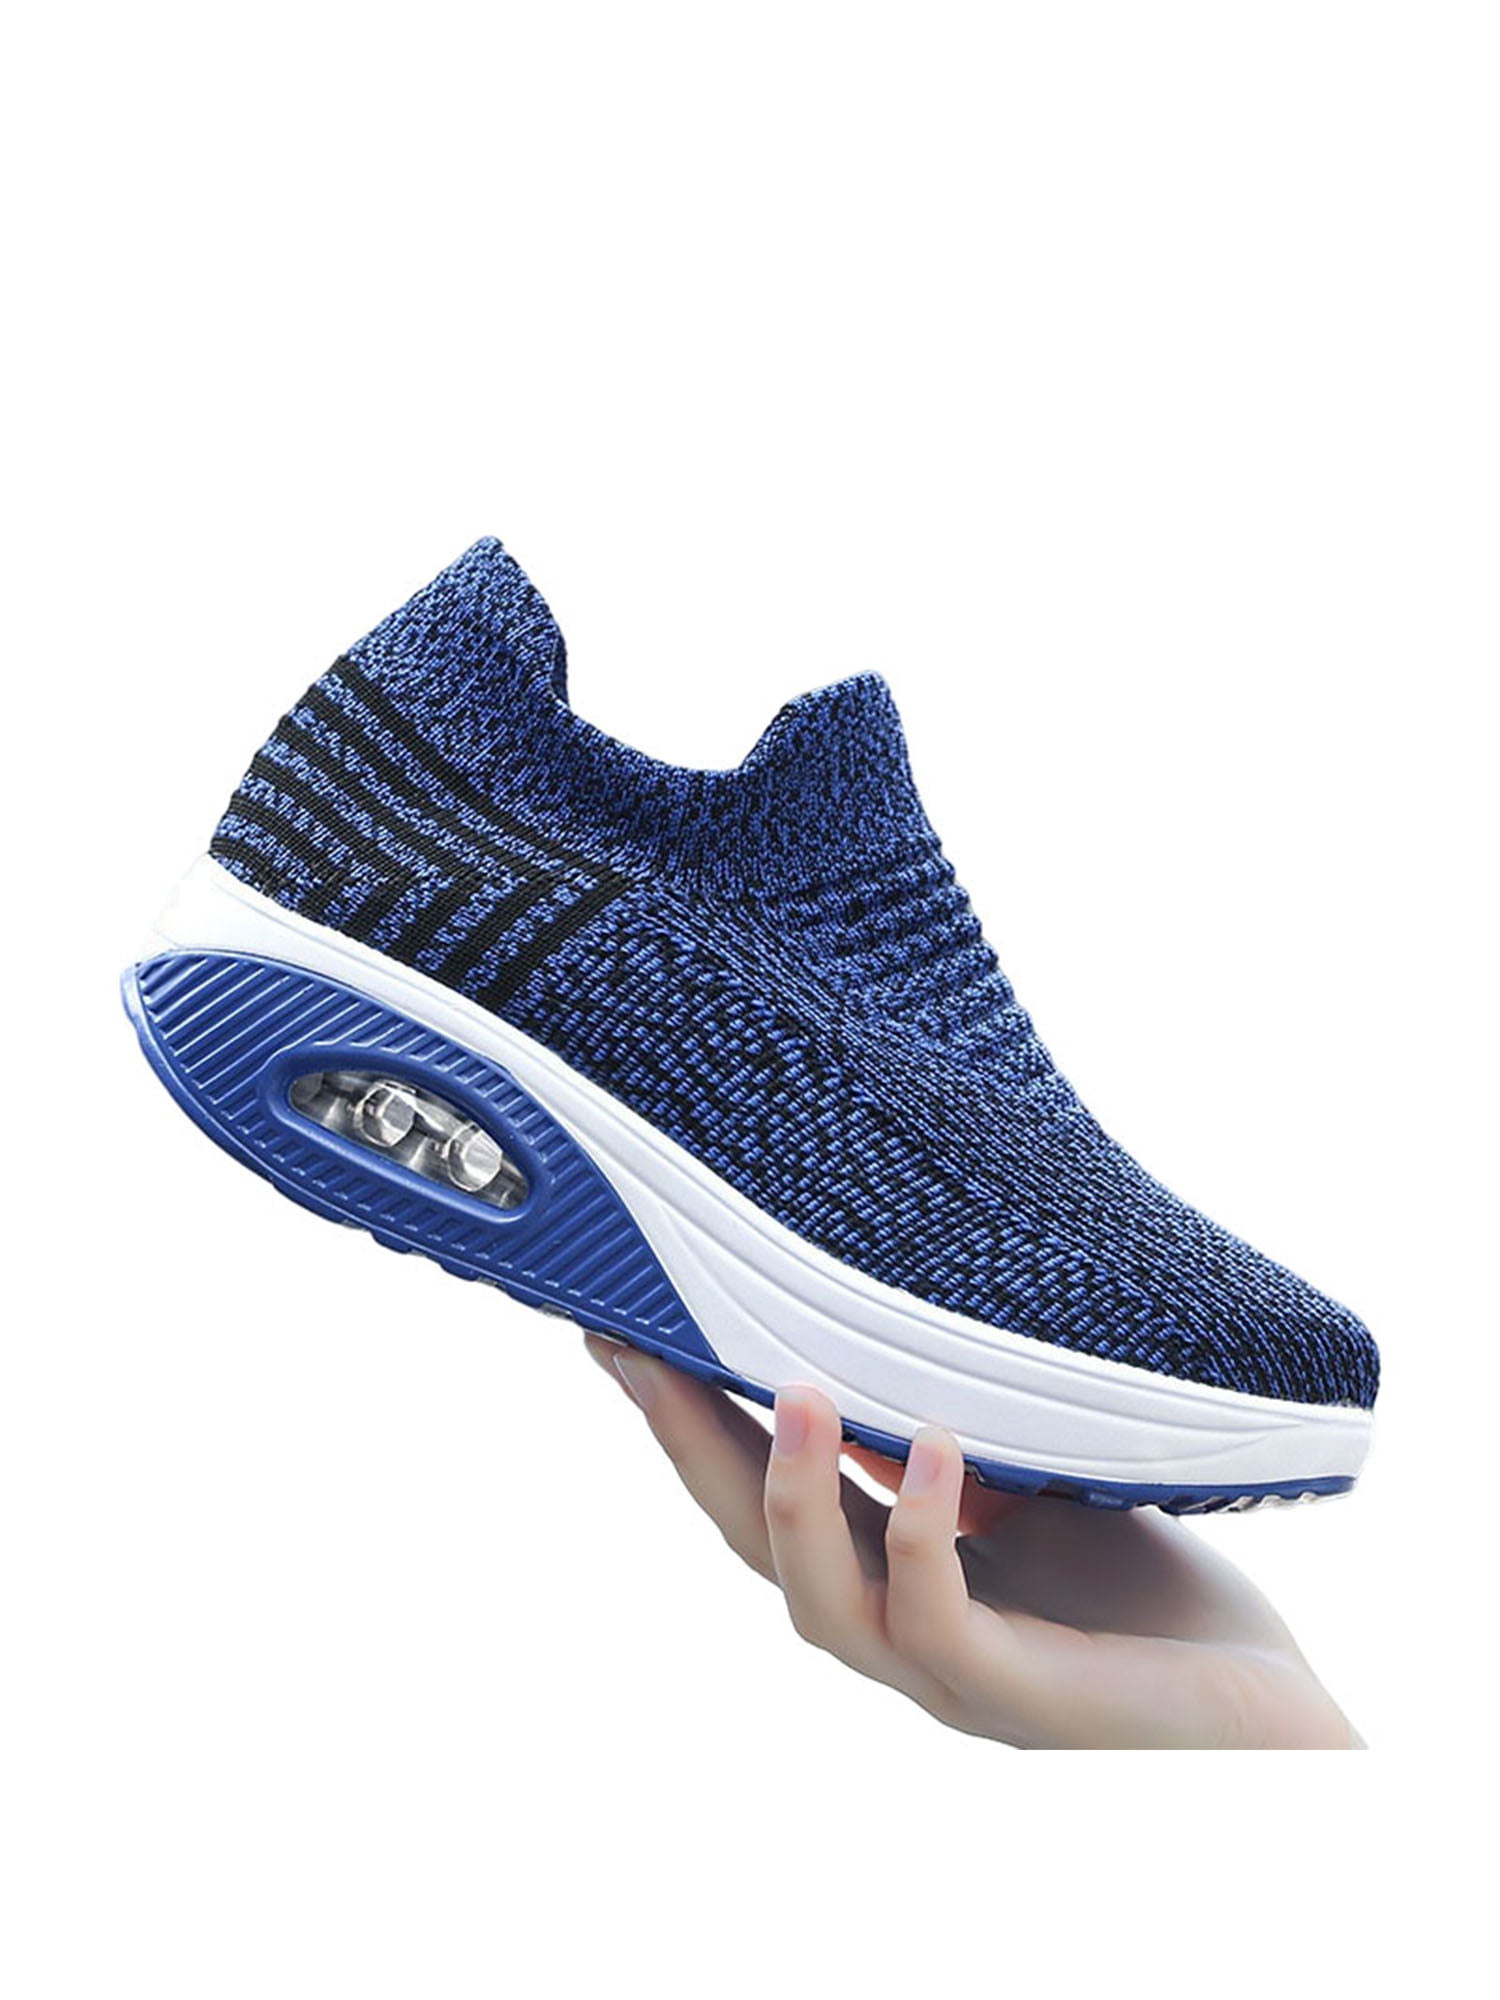 Tennis Shoes for Women,Women's Walking Shoes Sock Sneakers Mesh Slip On Air Cushion Nurse Shoes Platform Loafers 